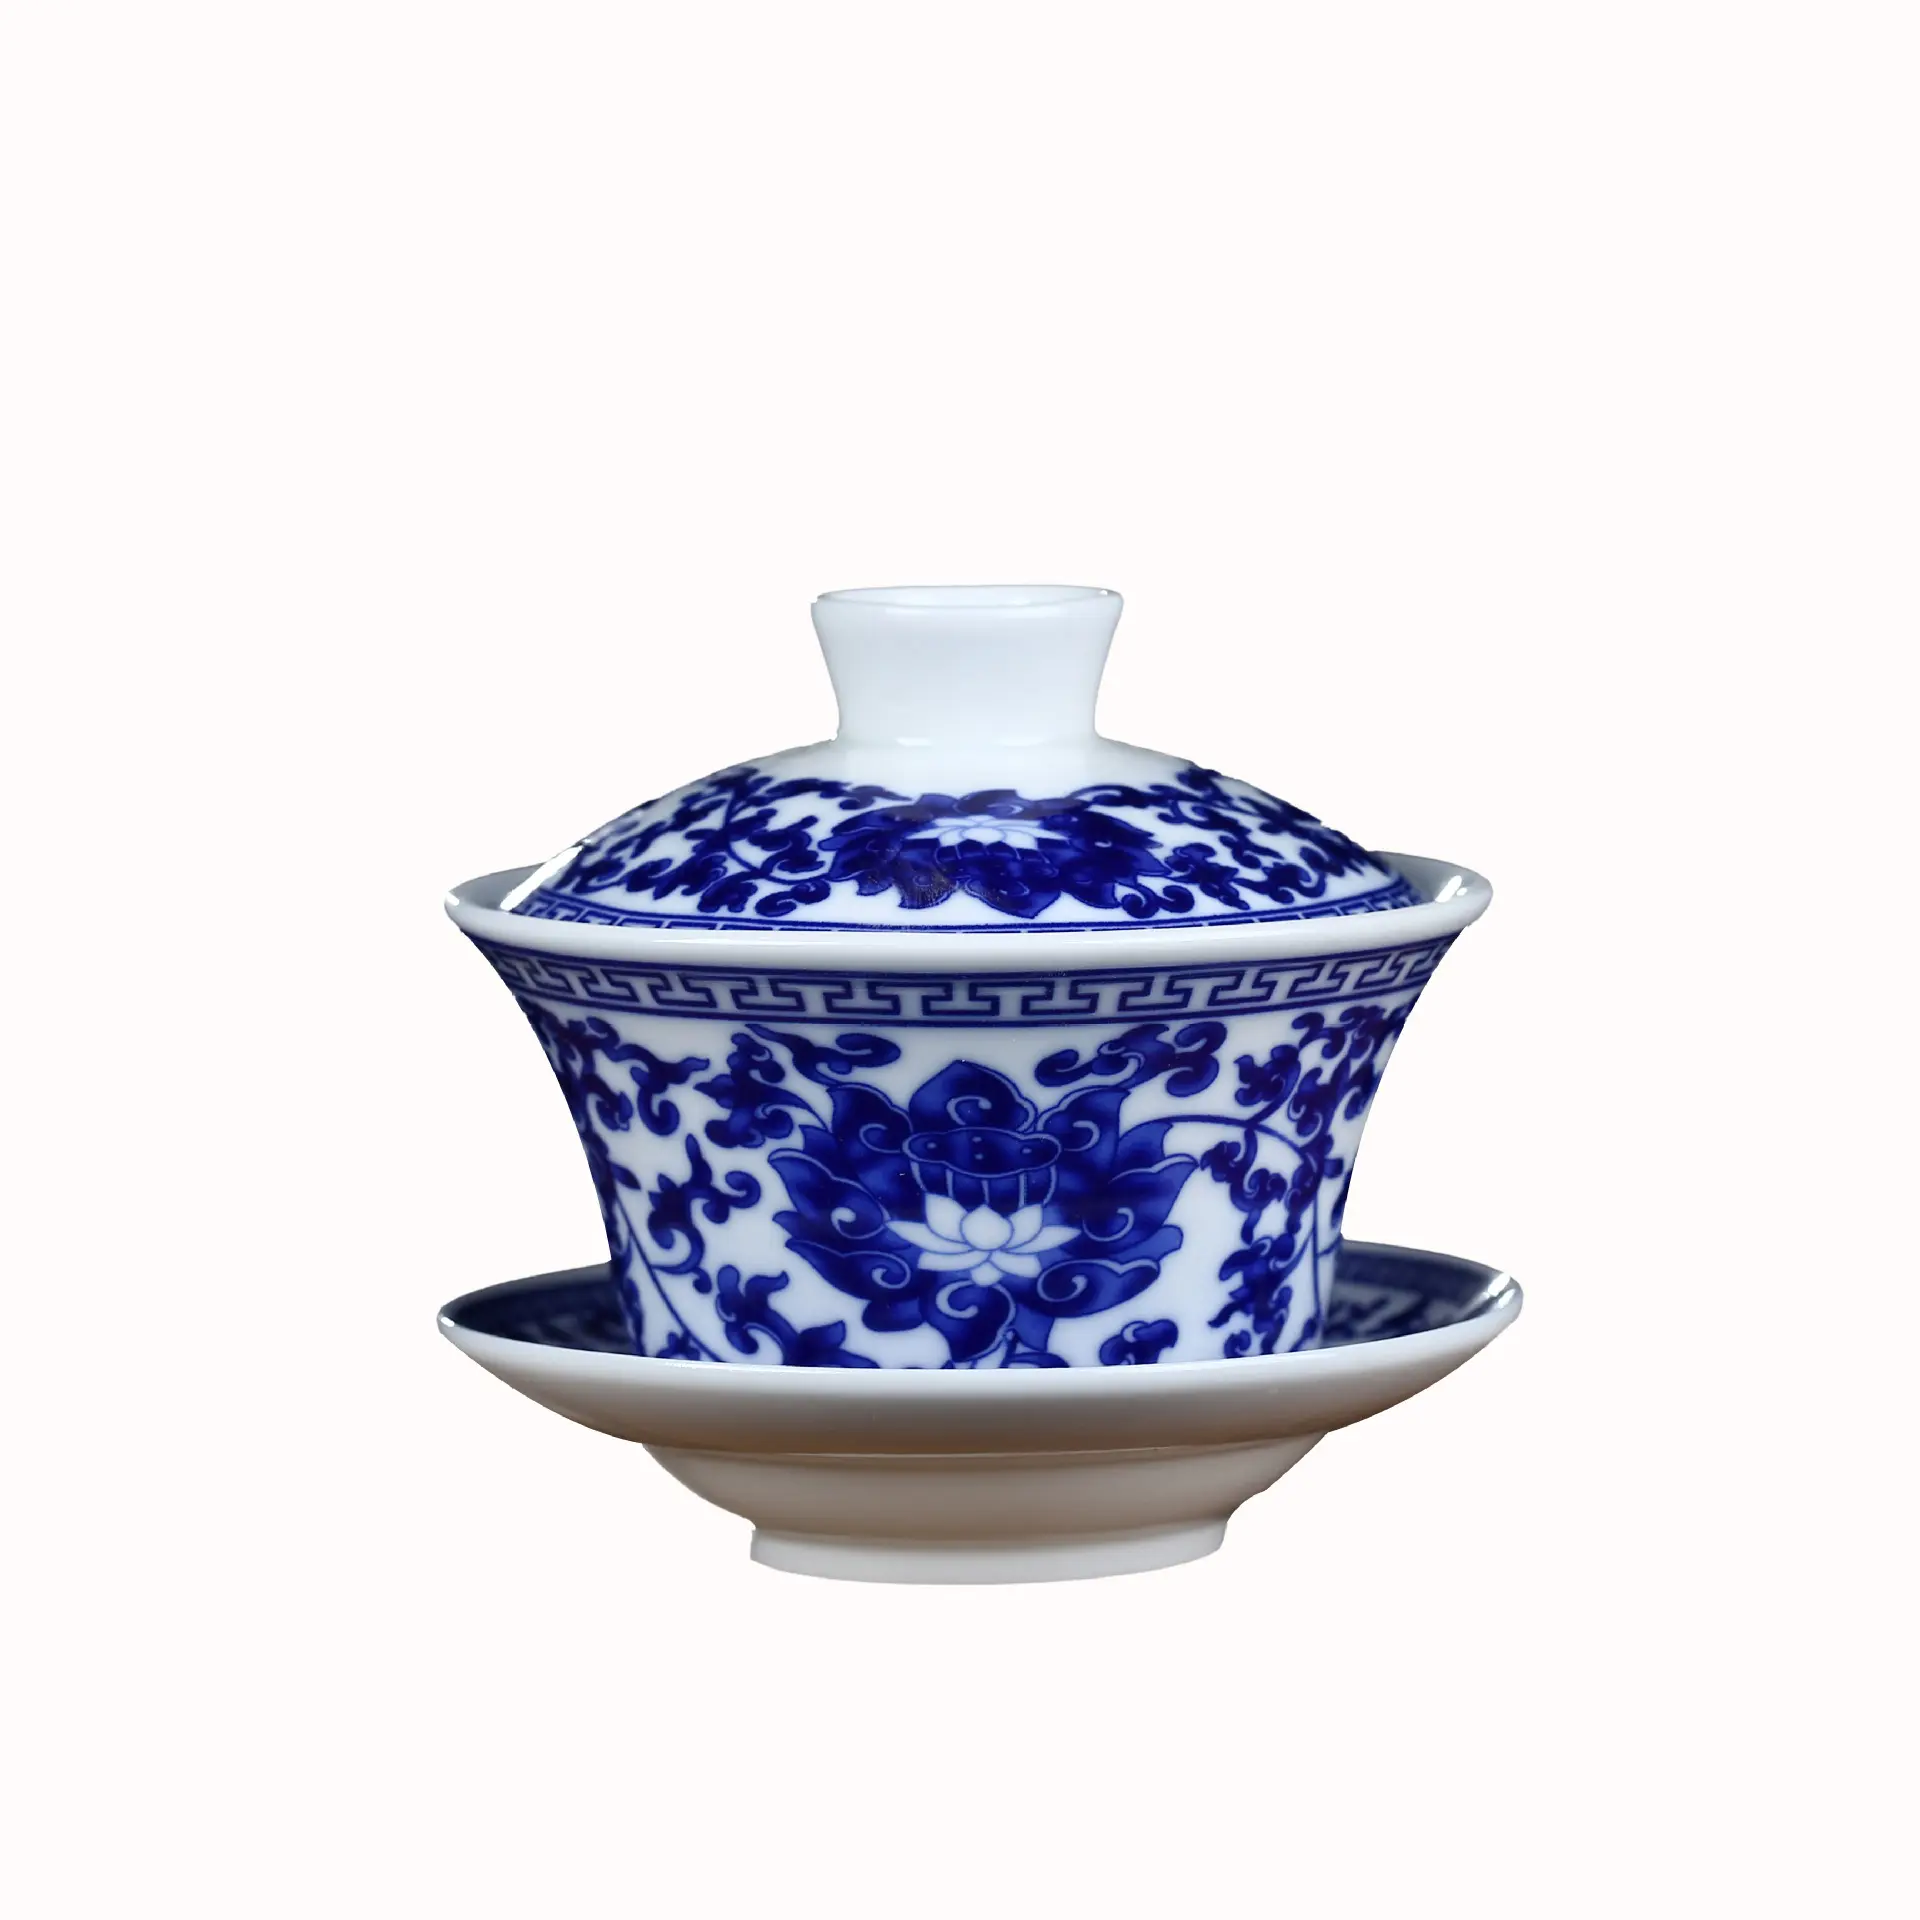 Cangkir Teh Teratai Klasik Tiongkok Bule Keramik Gaiwan dan Set Teh Porselen Putih dengan Pola Tradisional